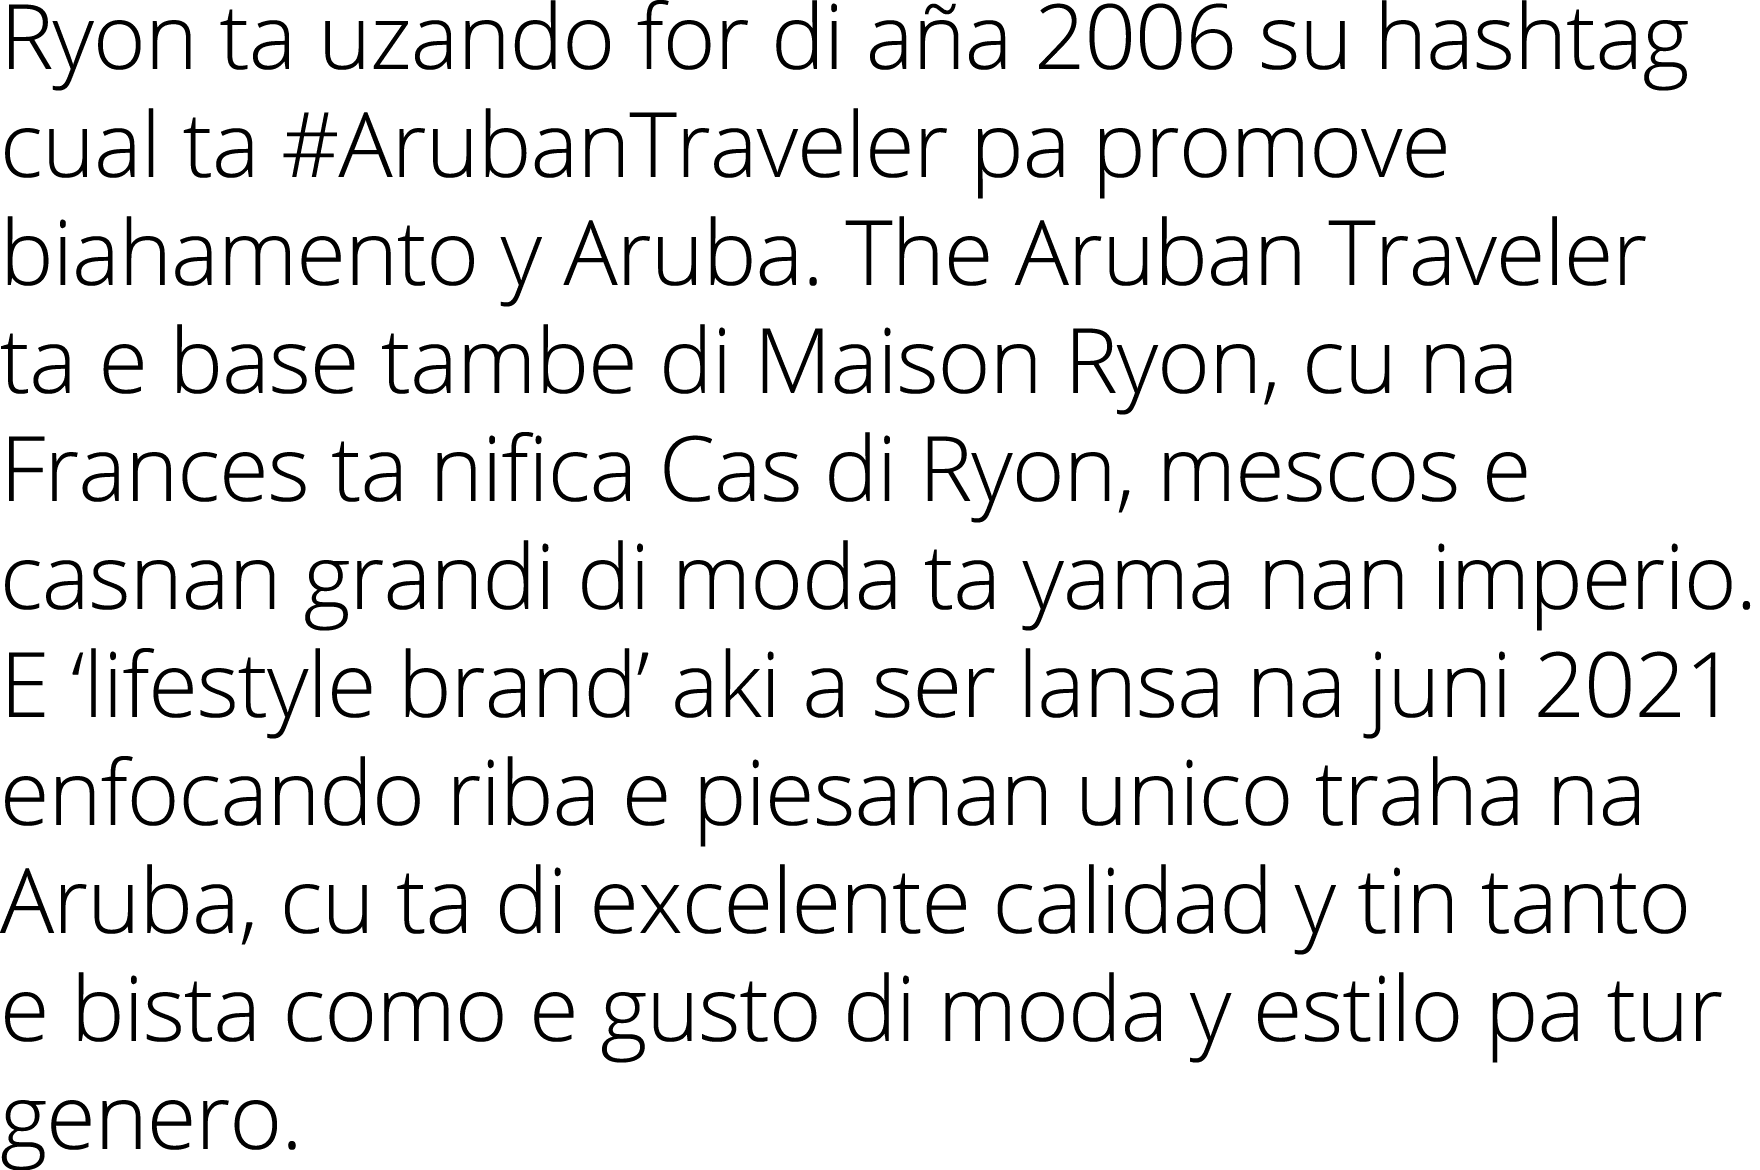 Ryon ta uzando for di aña 2006 su hashtag cual ta #ArubanTraveler pa promove biahamento y Aruba  The Aruban Traveler    